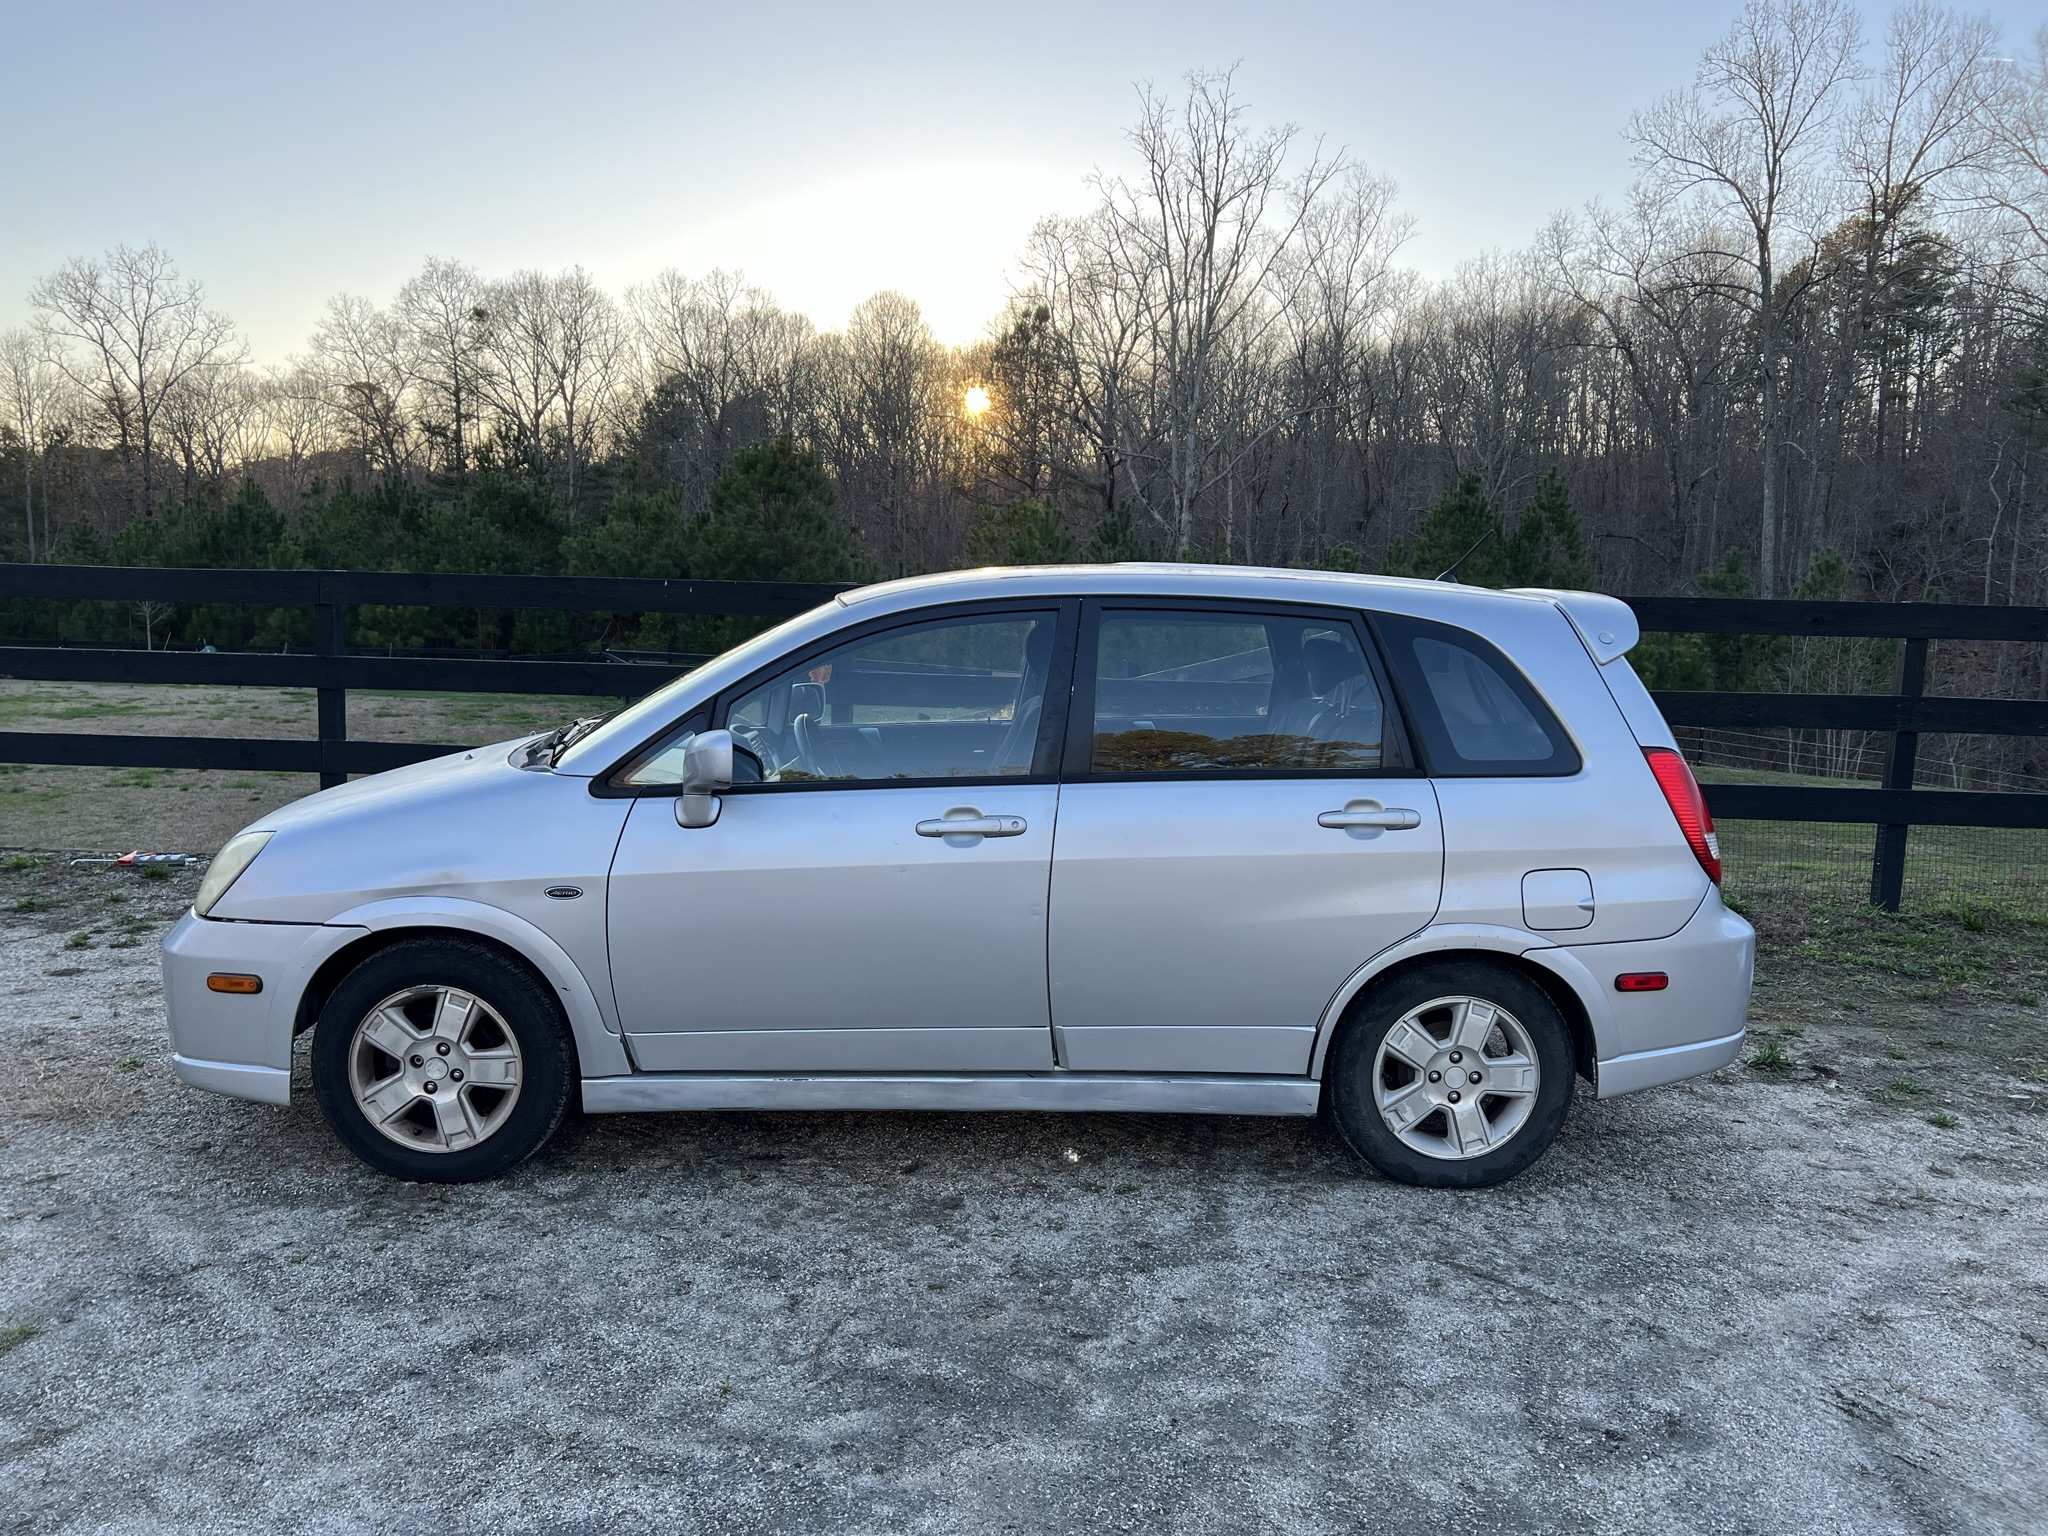 Used Suzuki Aerio for Sale in Marietta, GA (Test Drive at Home) - Kelley  Blue Book